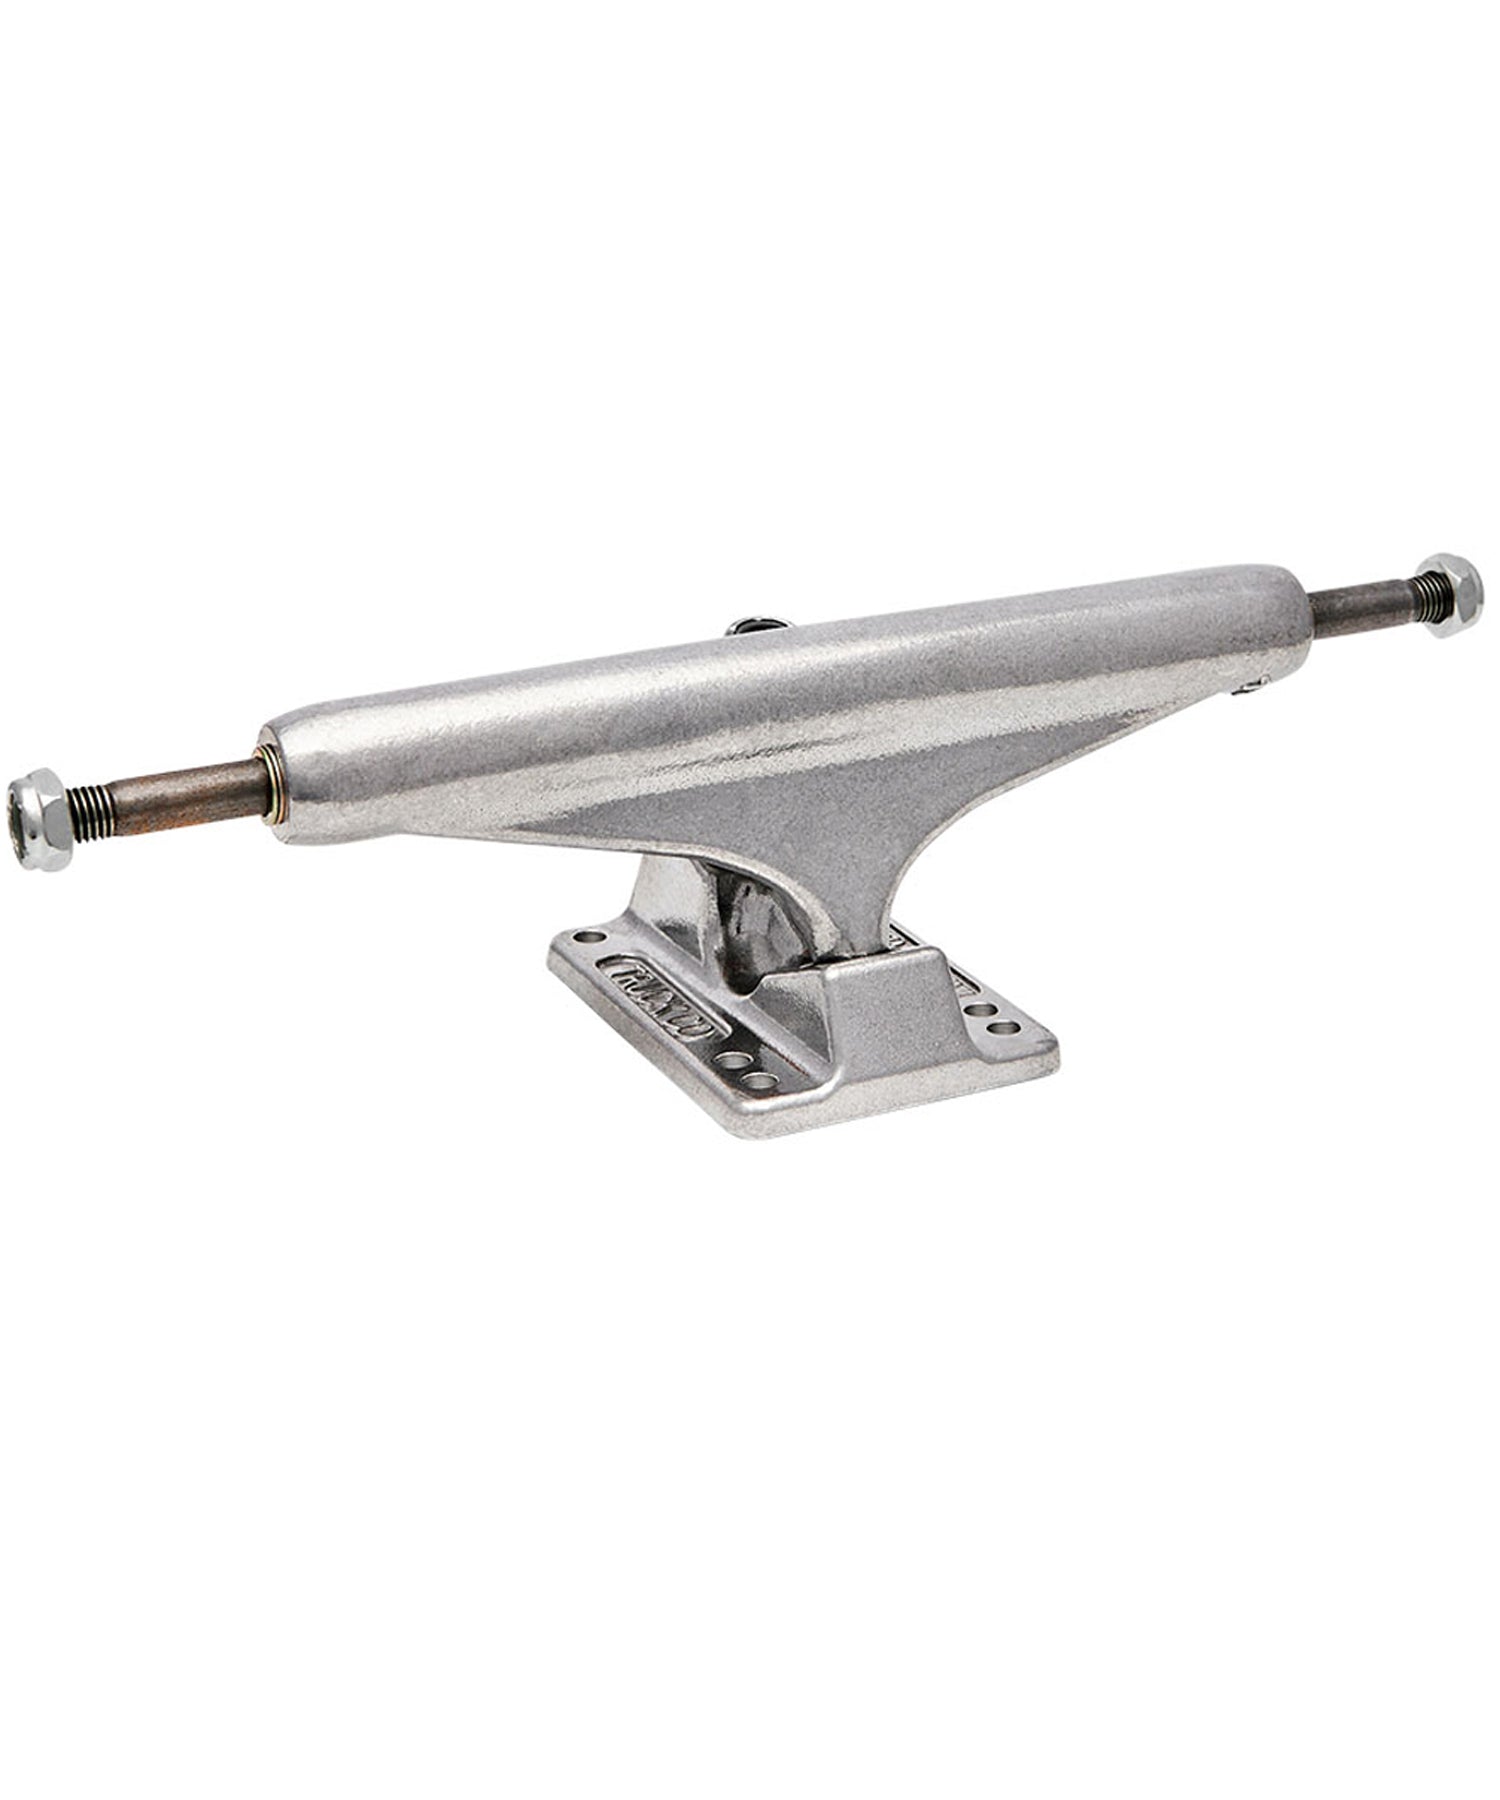 independent-standard-polished-169-mm-ejes de calidad-para skate-hanger y placa base de aluminio-duraderos-independent-marca reputada en ejes.